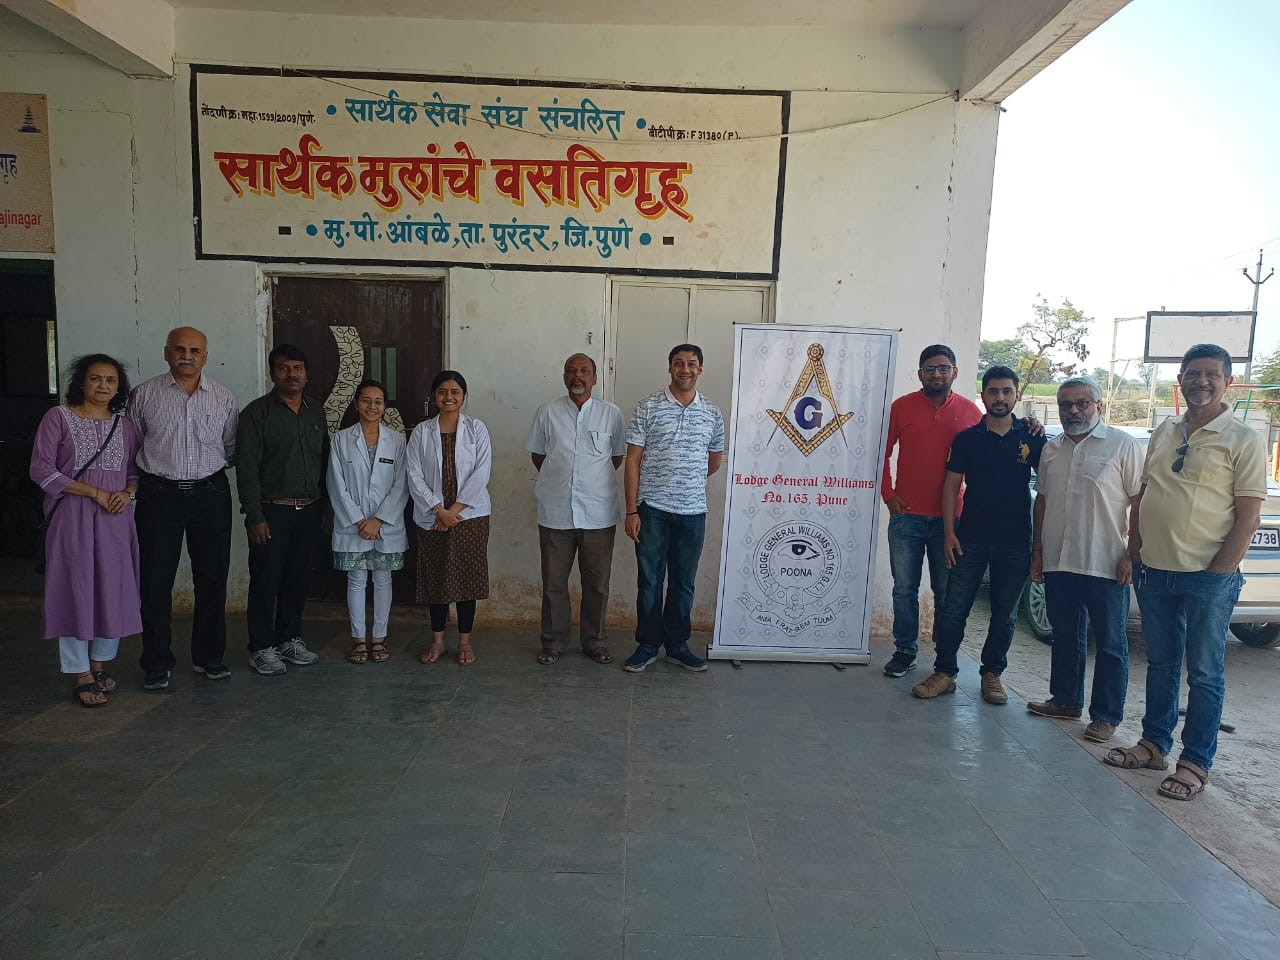 Sarthak Seva Sangh eye screening camp in collaboration with General Williams Lodge, Community Eye Care Foundation and BV(DU), School of Optometry, Pune